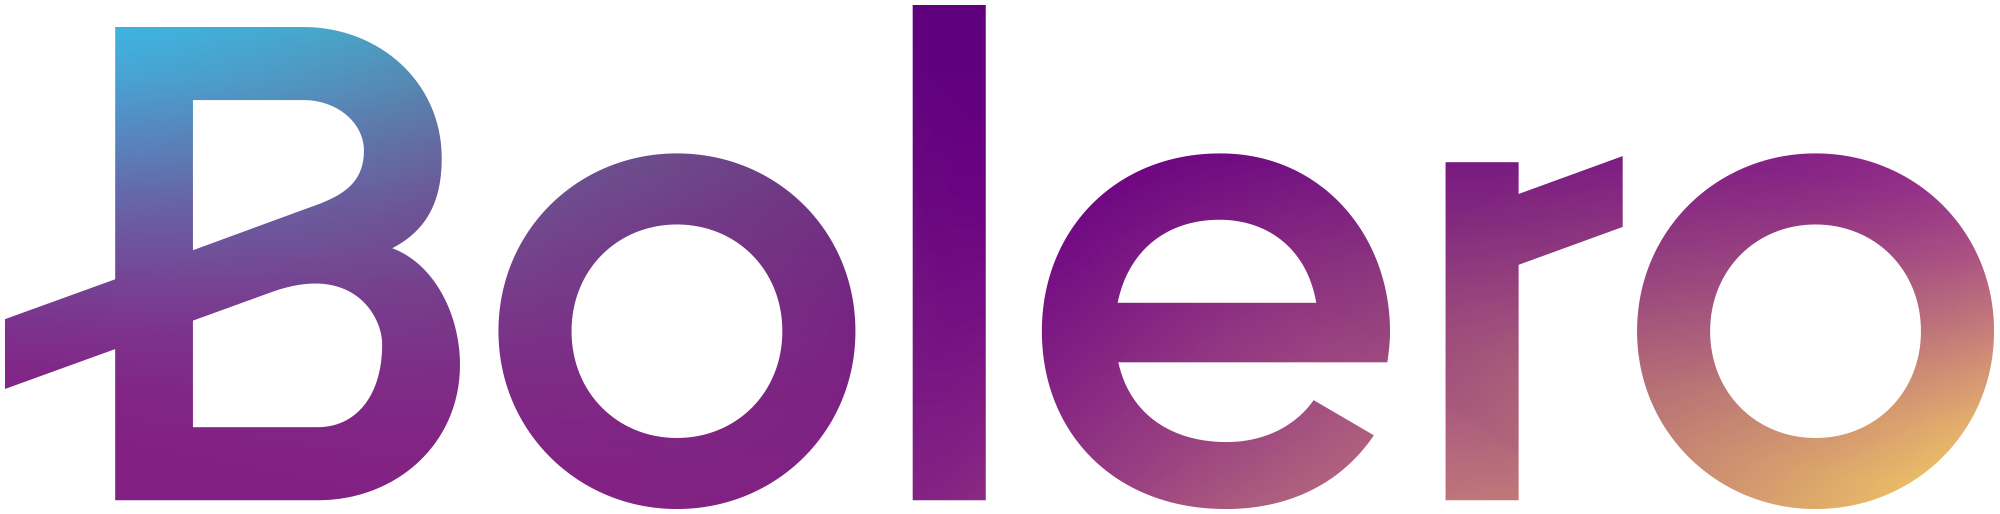 BOLERO_Logo_Gradient